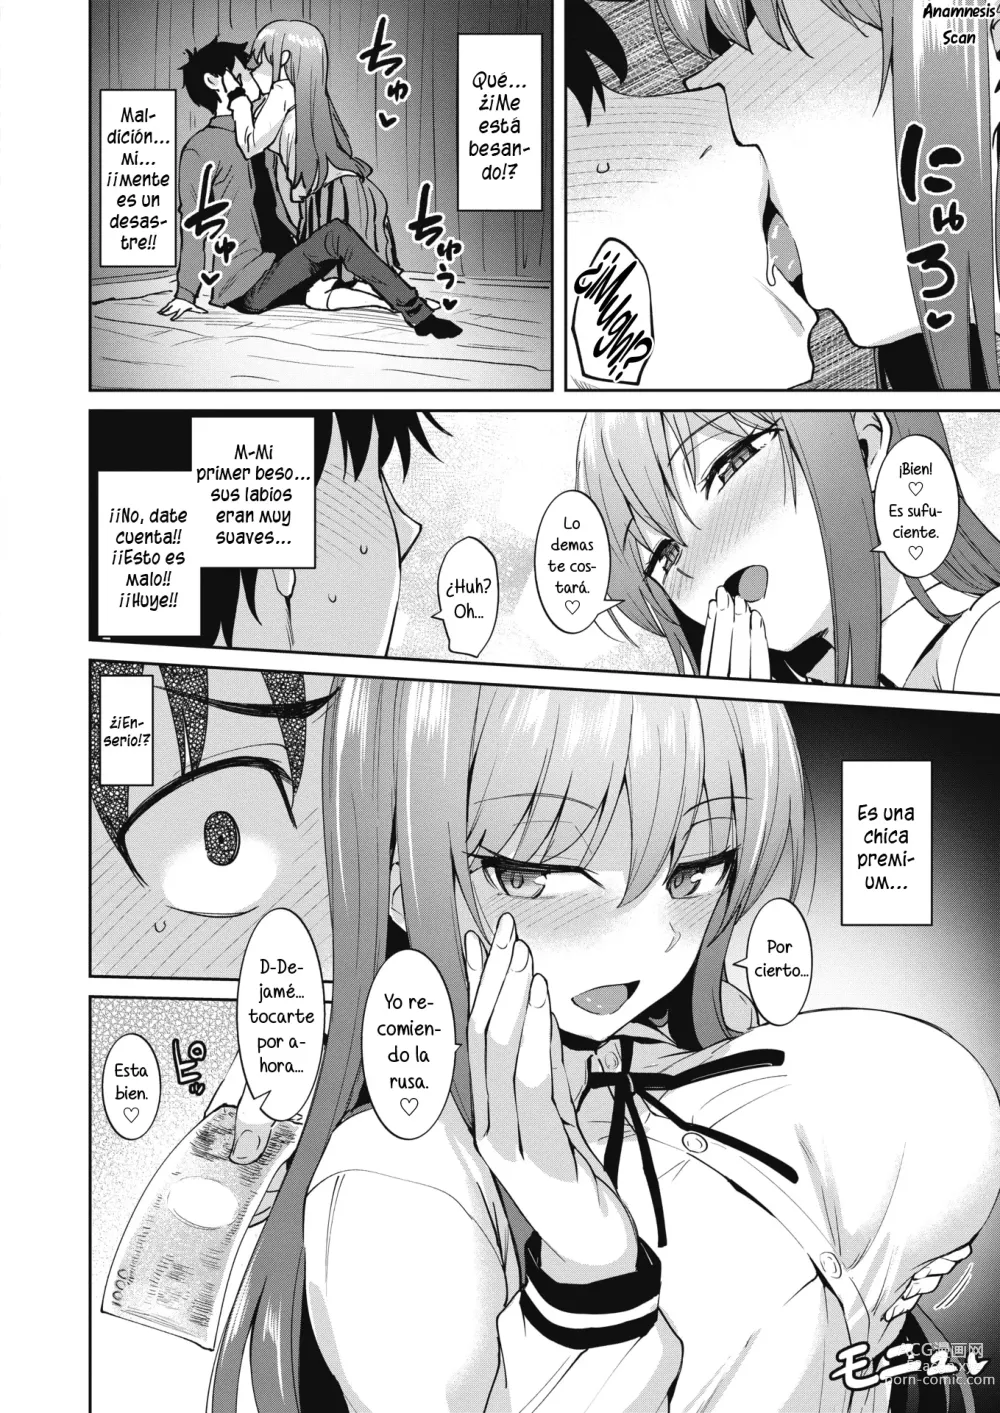 Page 6 of manga Dore ni Suru? - Which ecstasy do you want?